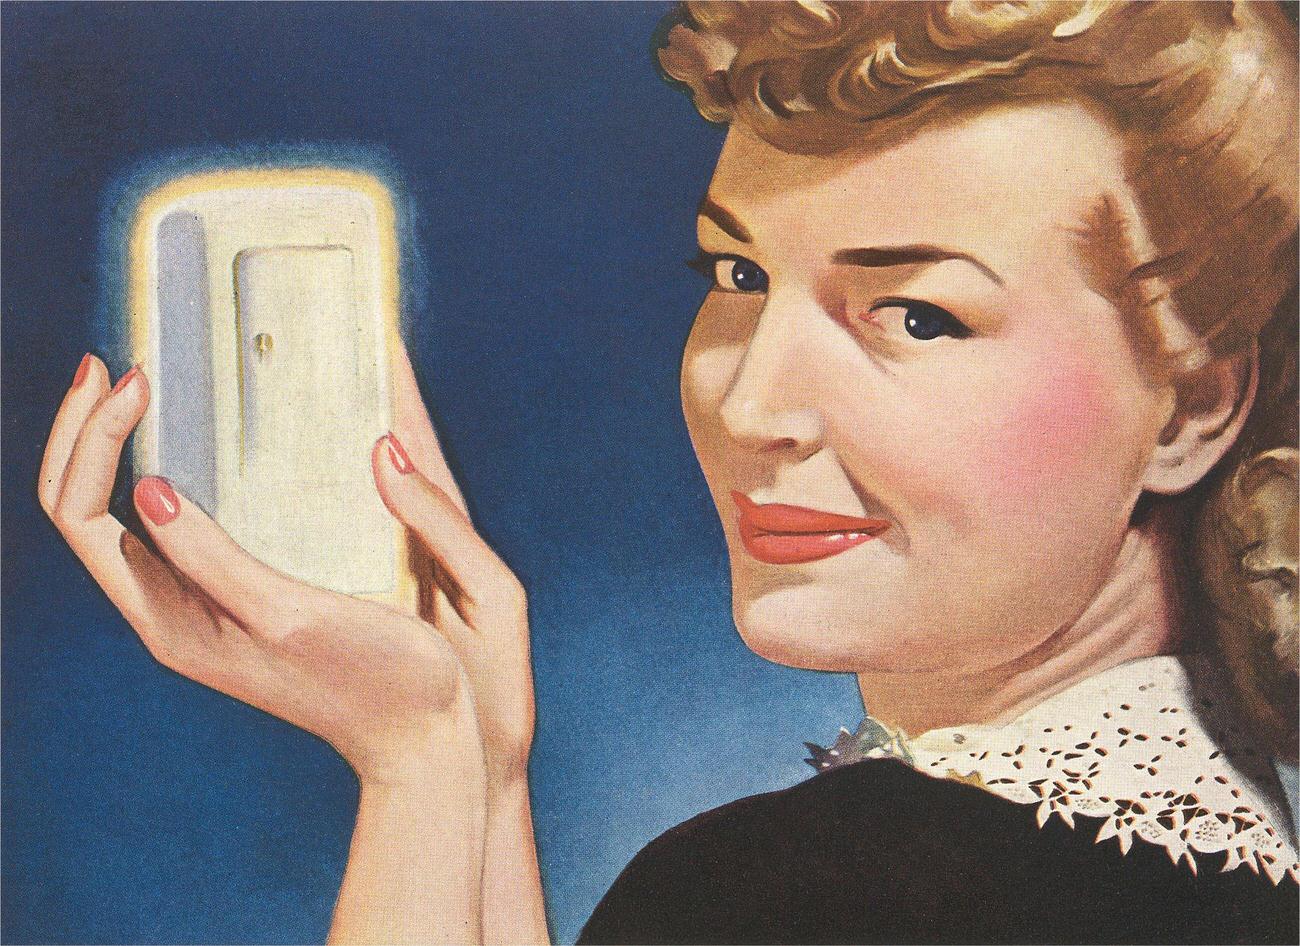 Woman holding miniature fridge, 1940s.